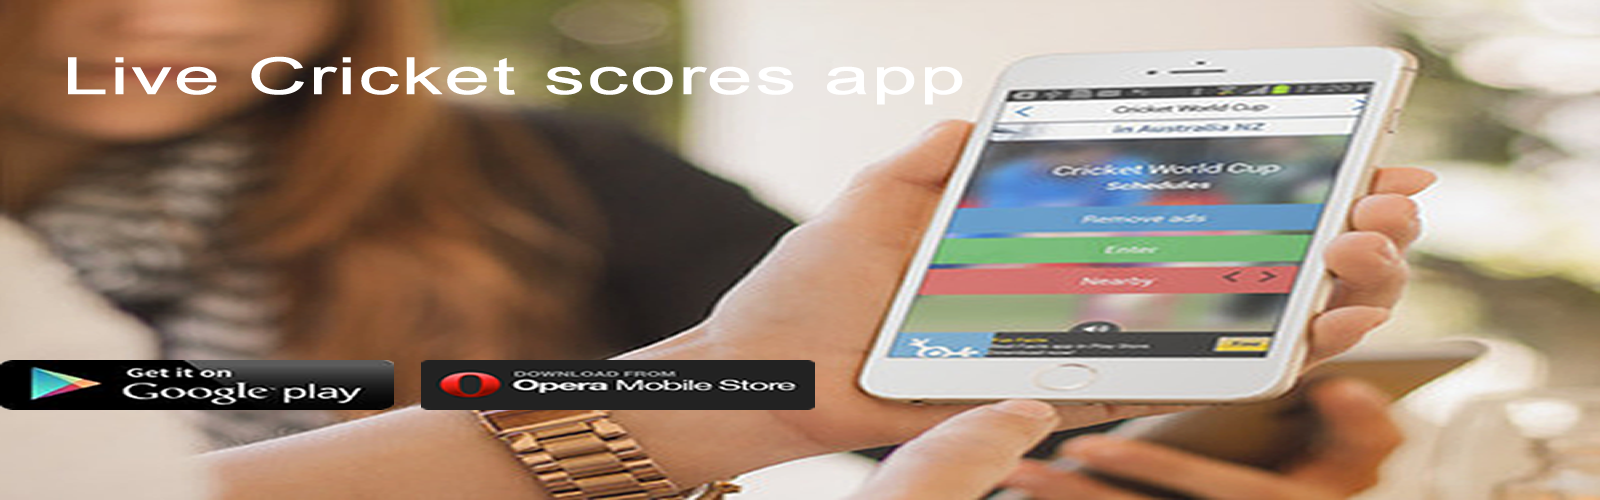 Live cricket scores app